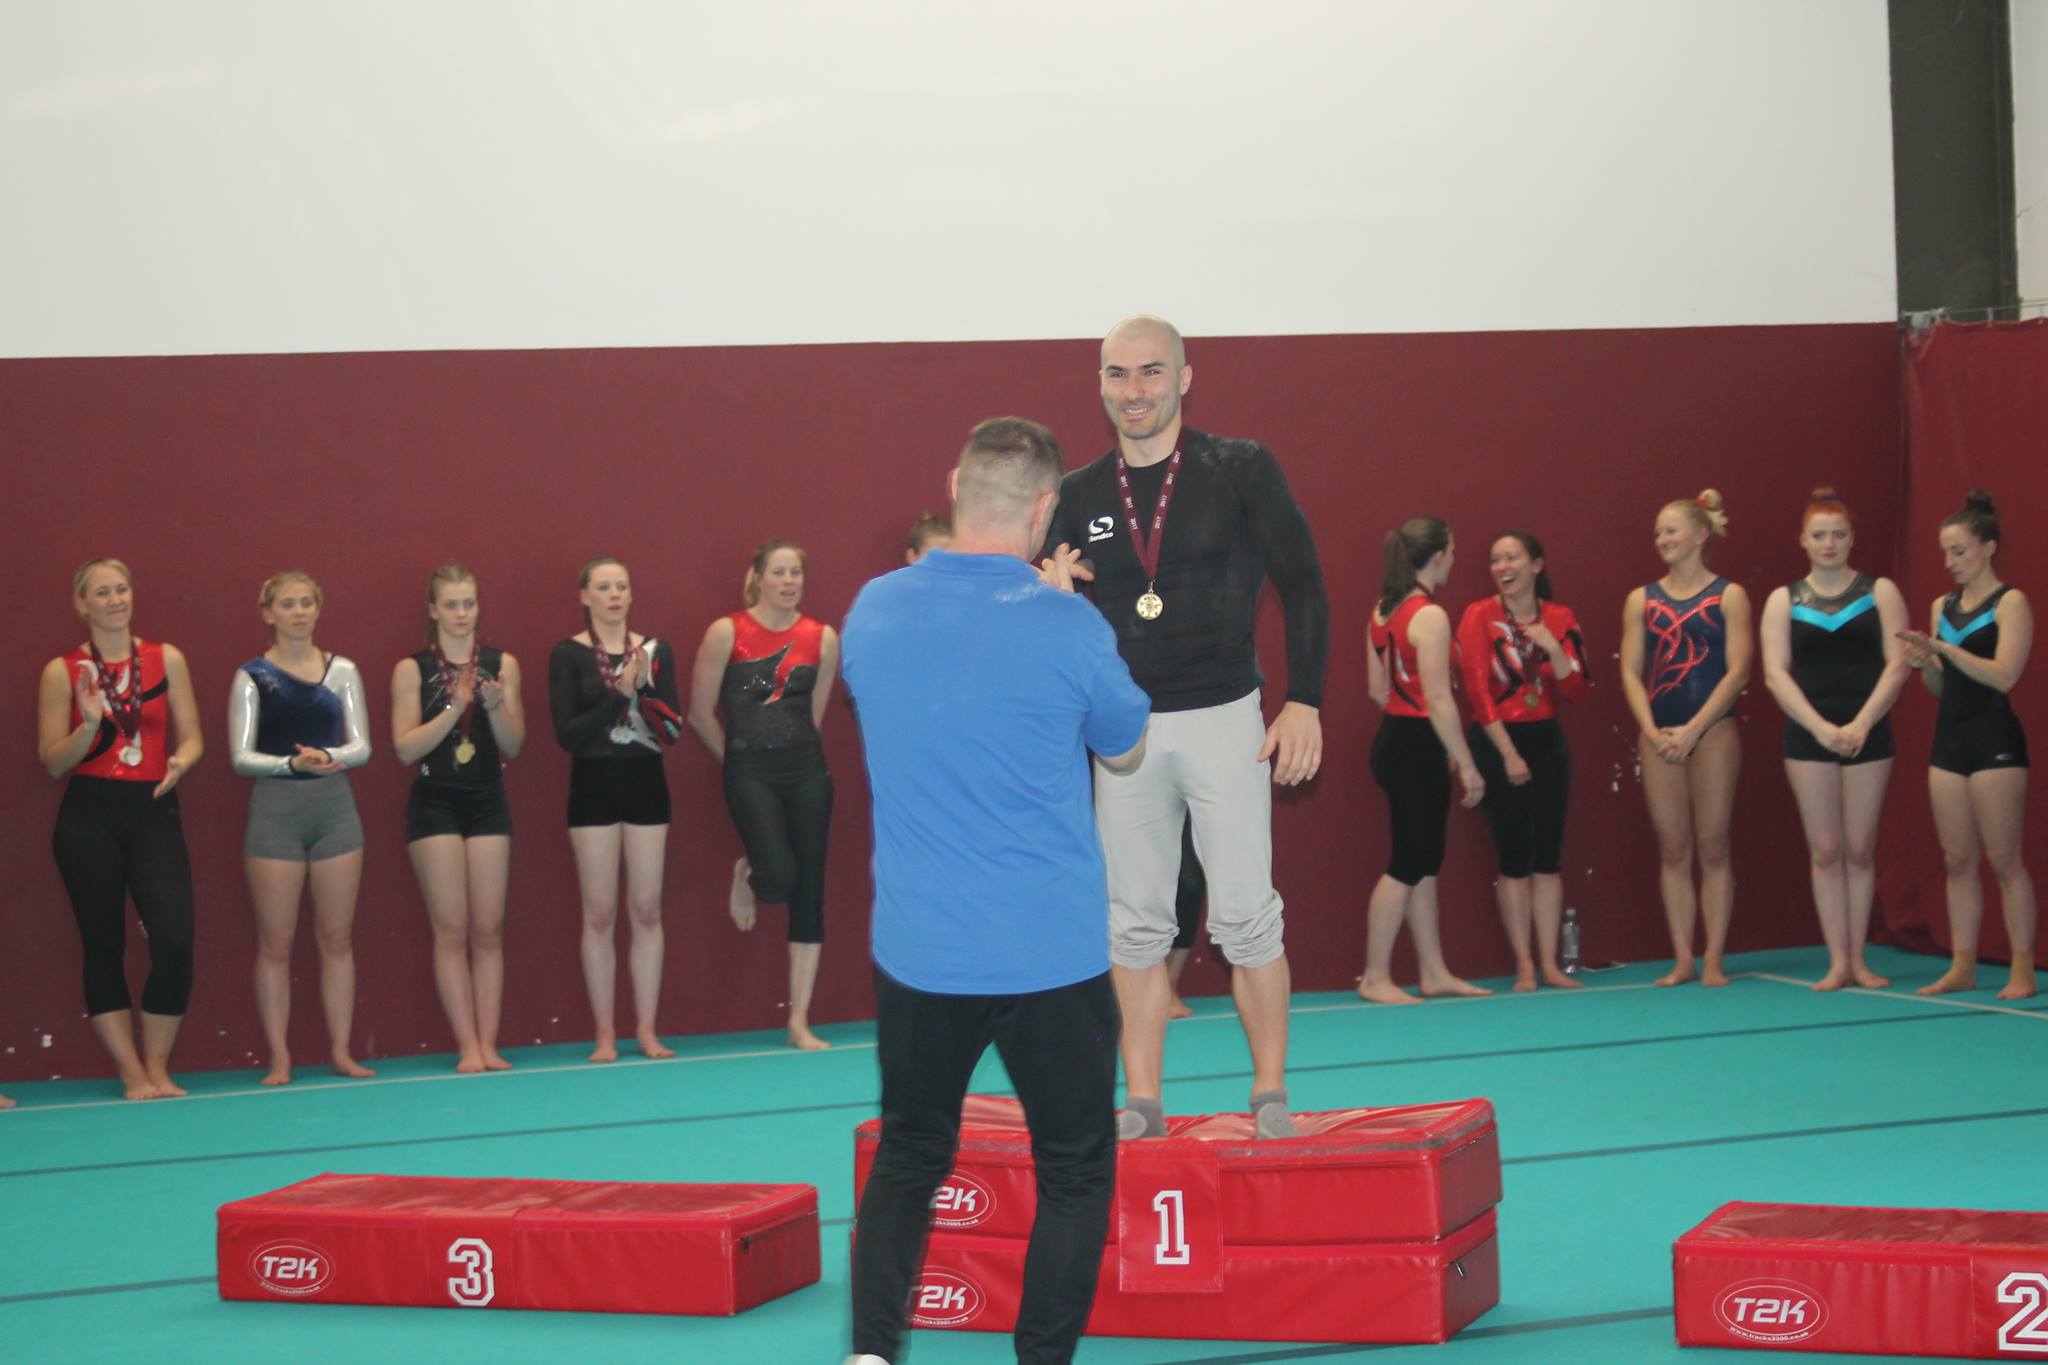 2017 Sutton Gymnastics Academy Rings Champion - Stefan Kolimechkov